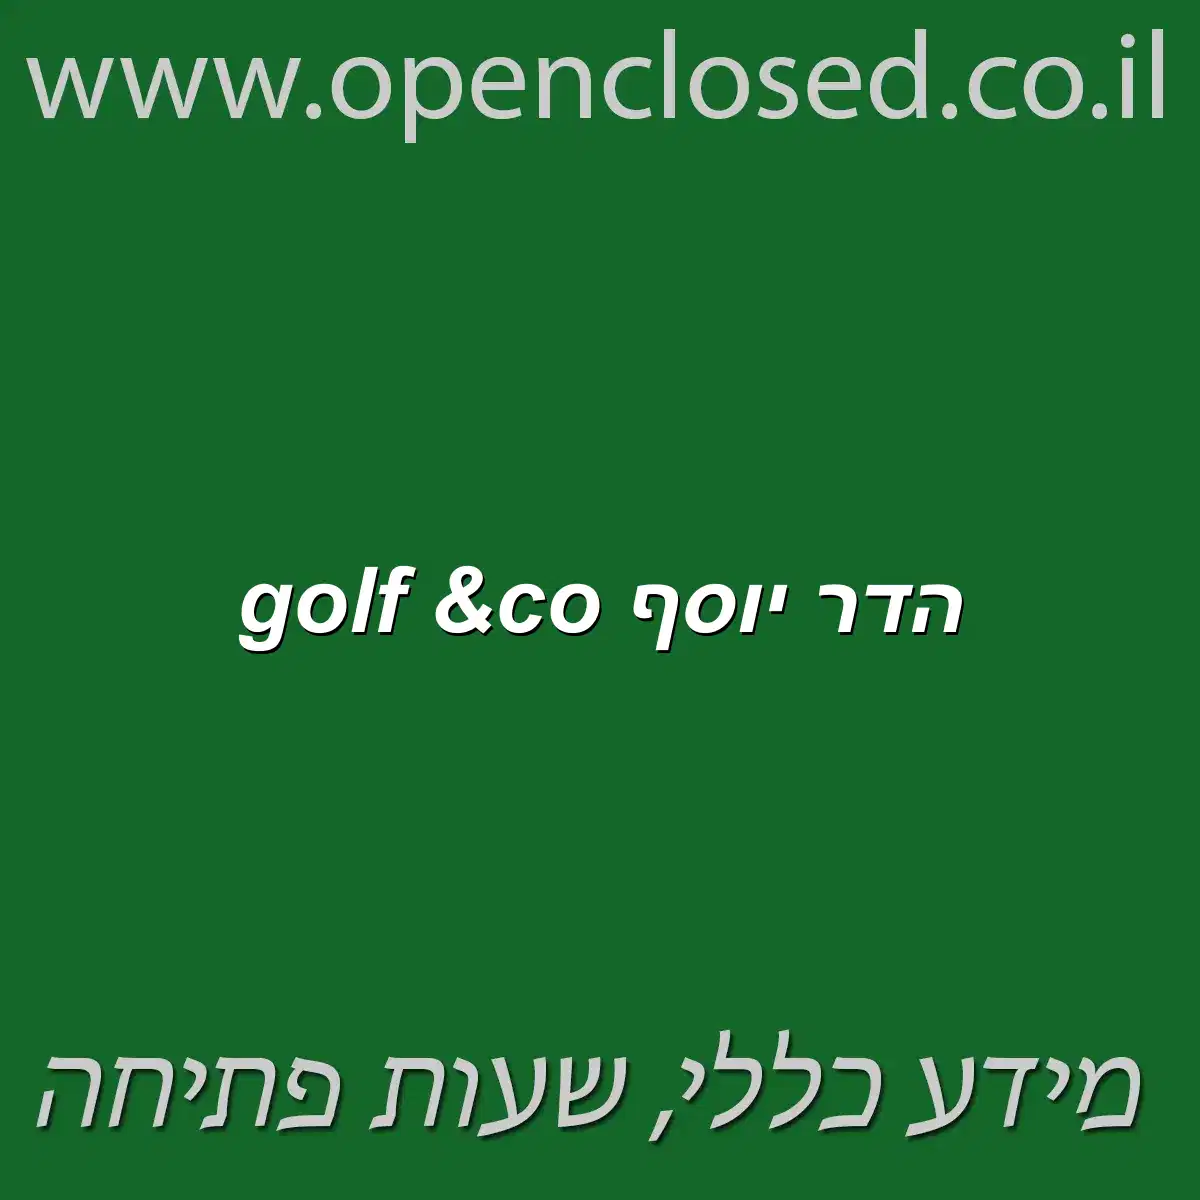 golf &co הדר יוסף